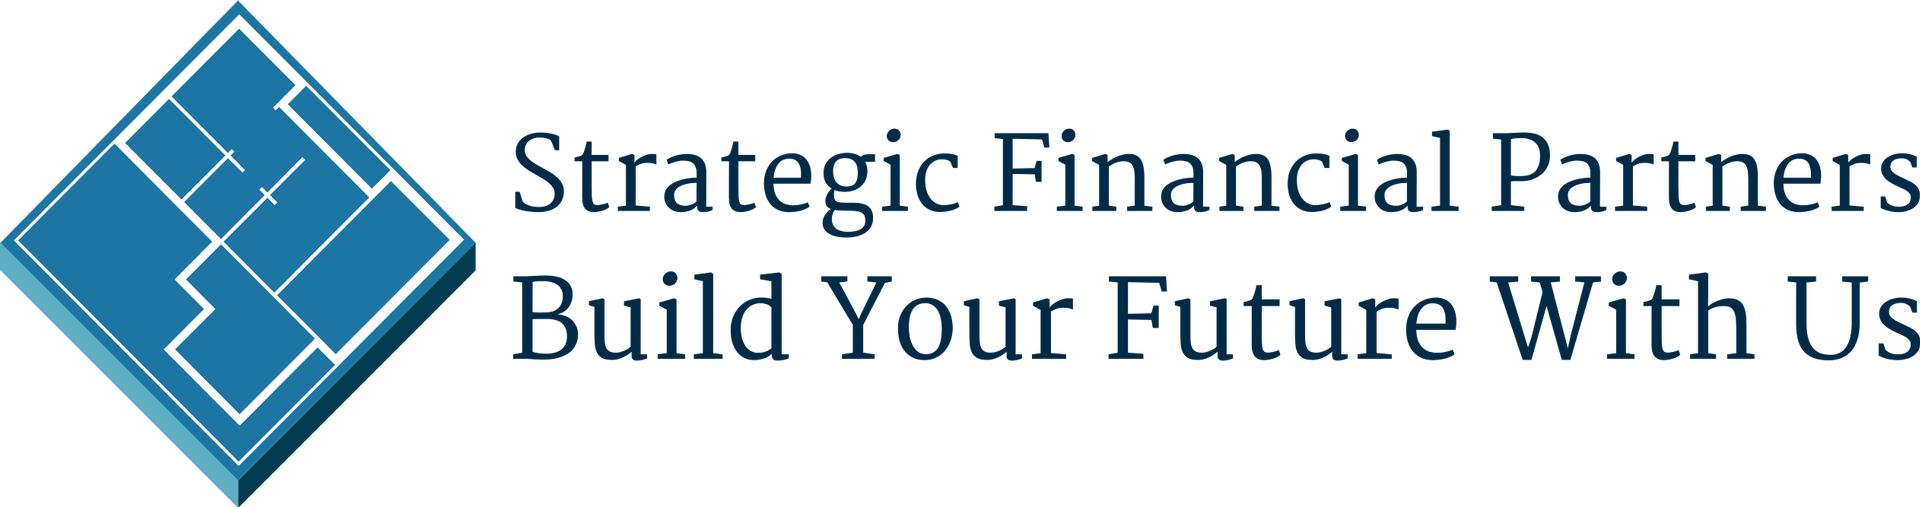 Strategic Financial Partners